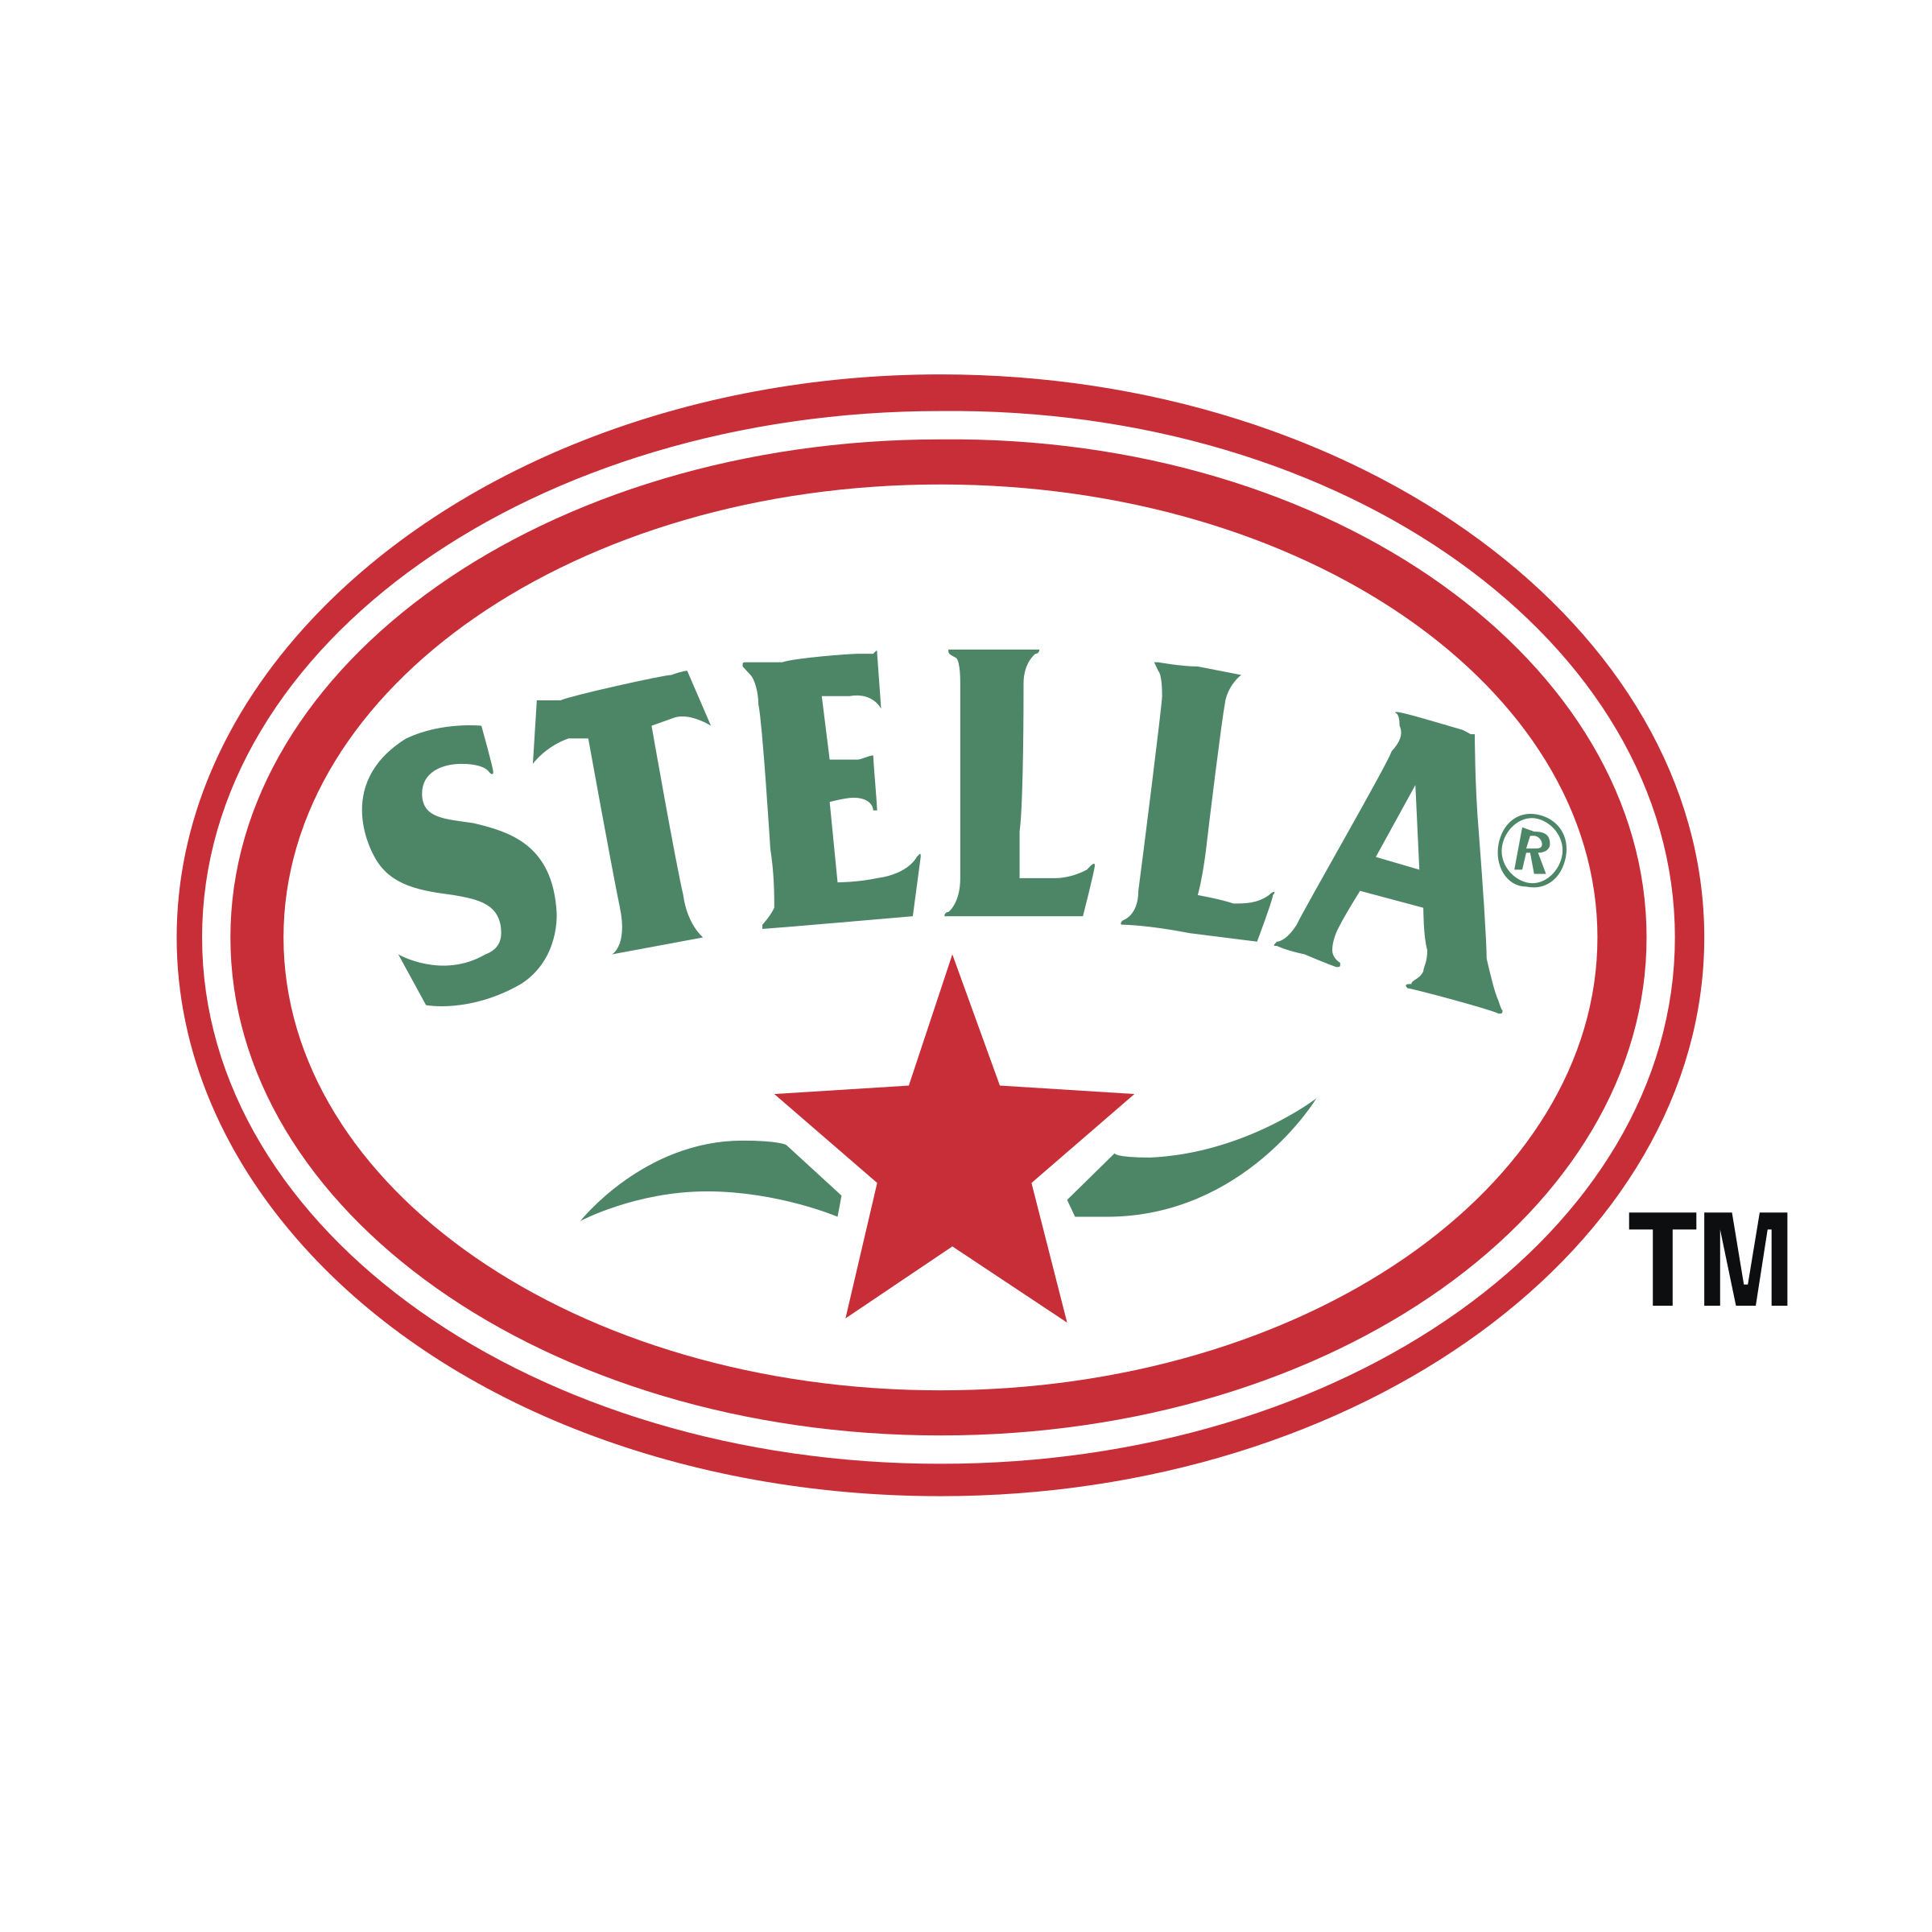 Stella Logo - Stella Logo PNG Transparent & SVG Vector - Freebie Supply